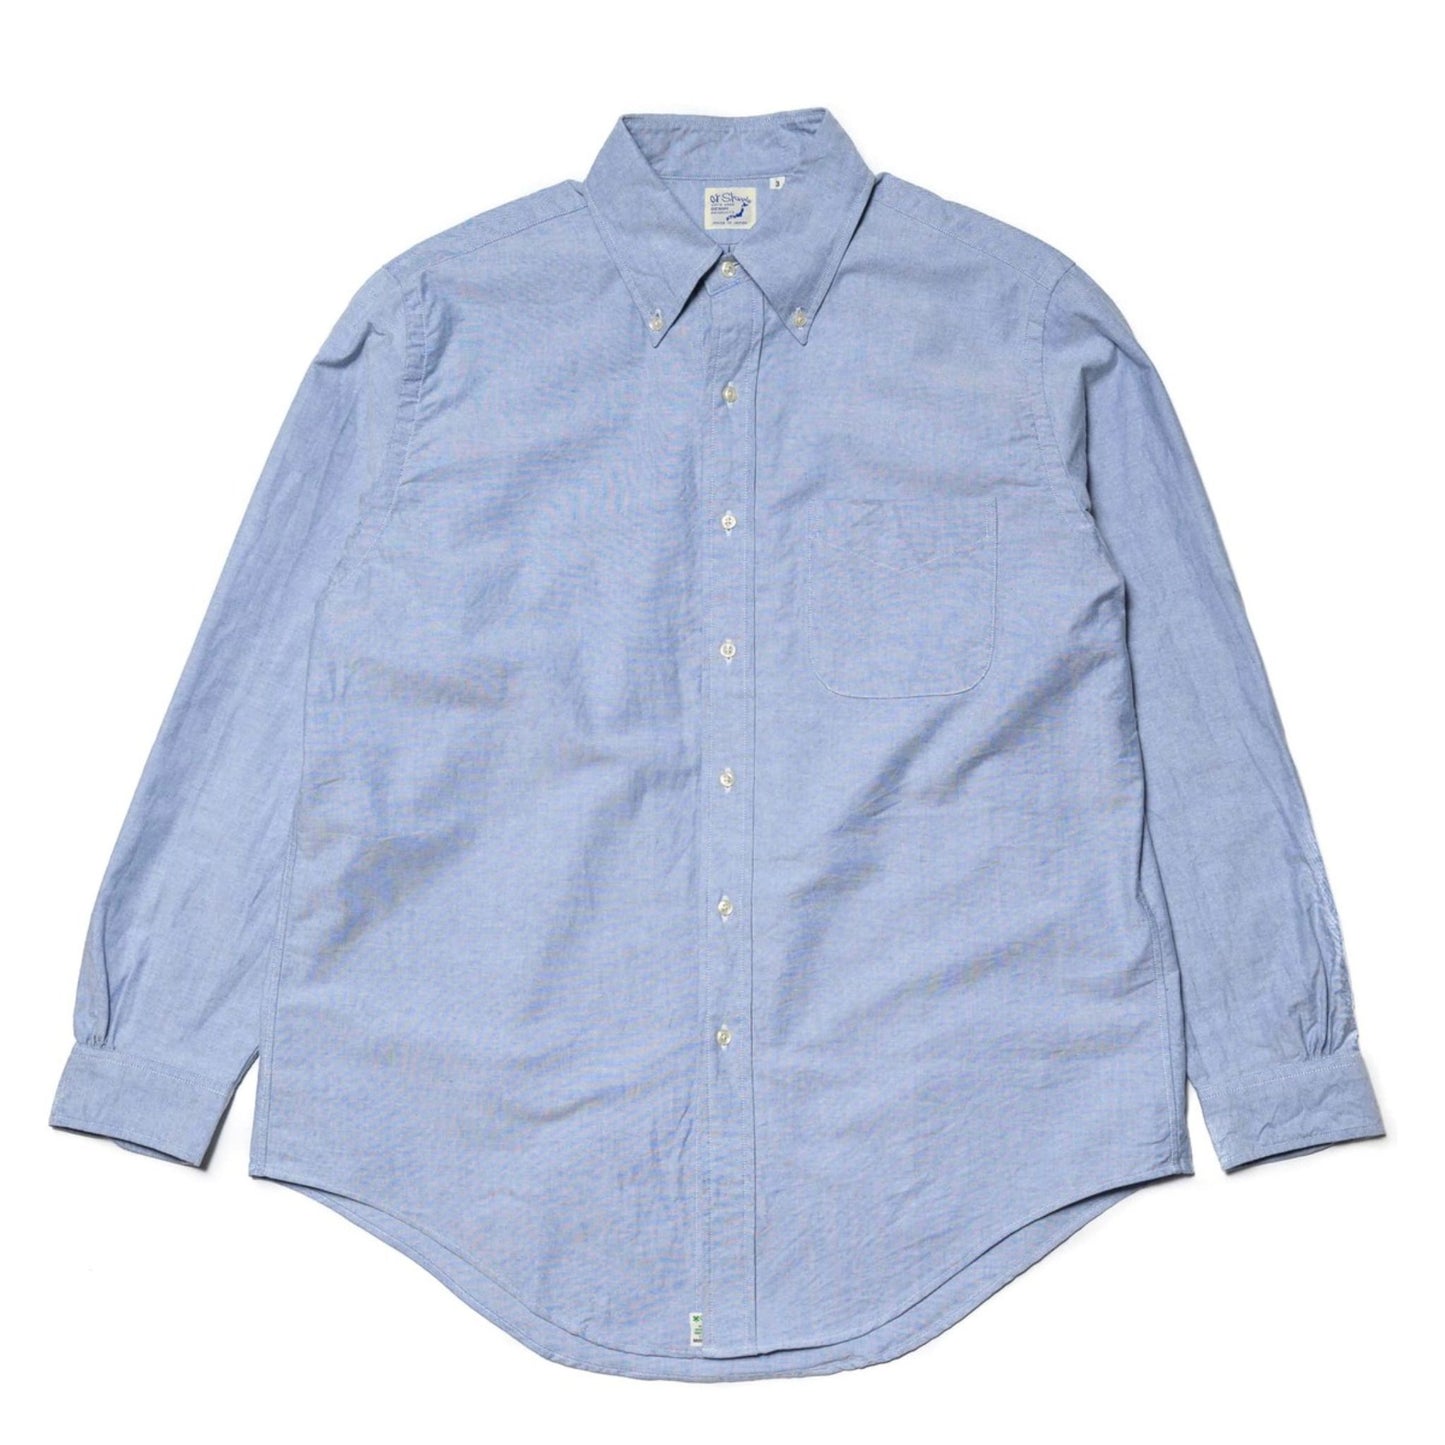 ORSLOW - Oxford Standard B.D. Shirt